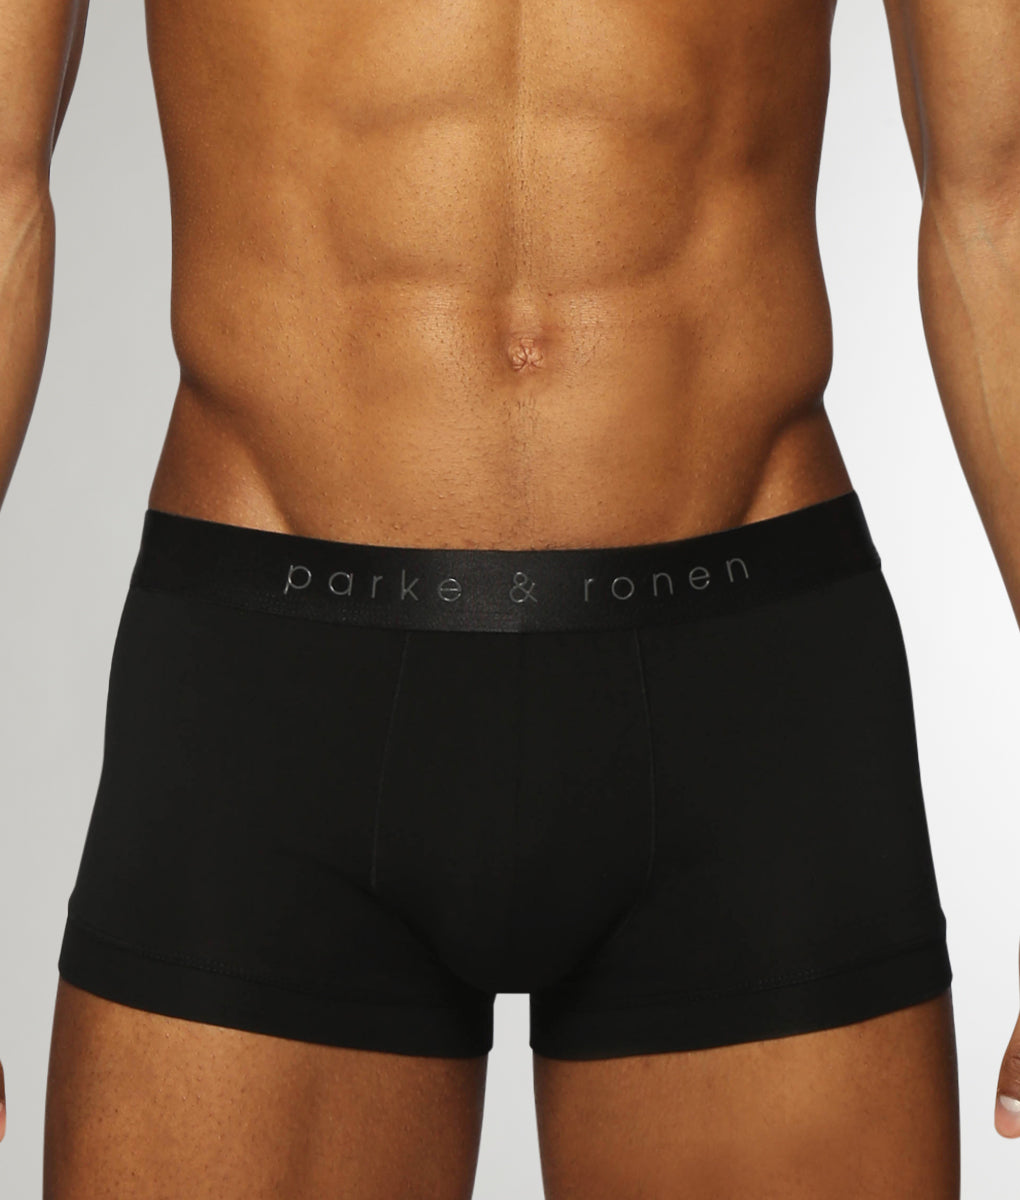 Parke & Ronen Solid Low-Rise Trunk - Underwear Expert